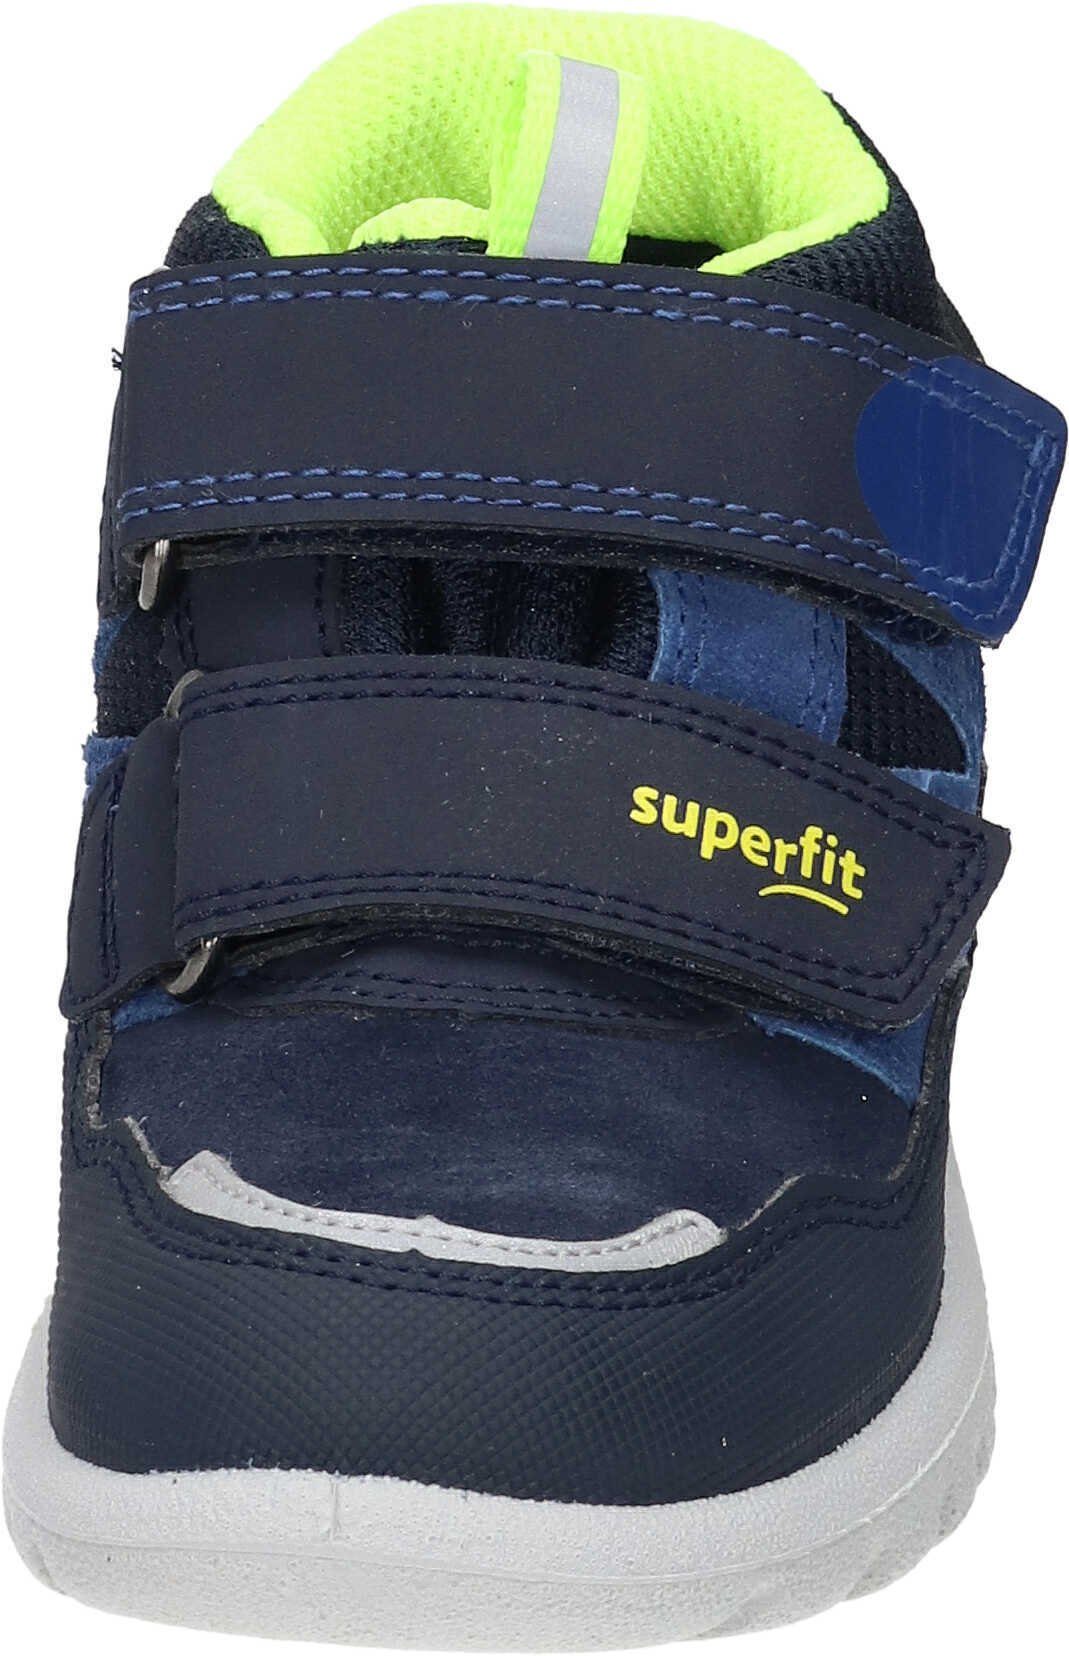 Stiefel aus Superfit Synthetik blau strapazierfähigem Stiefel